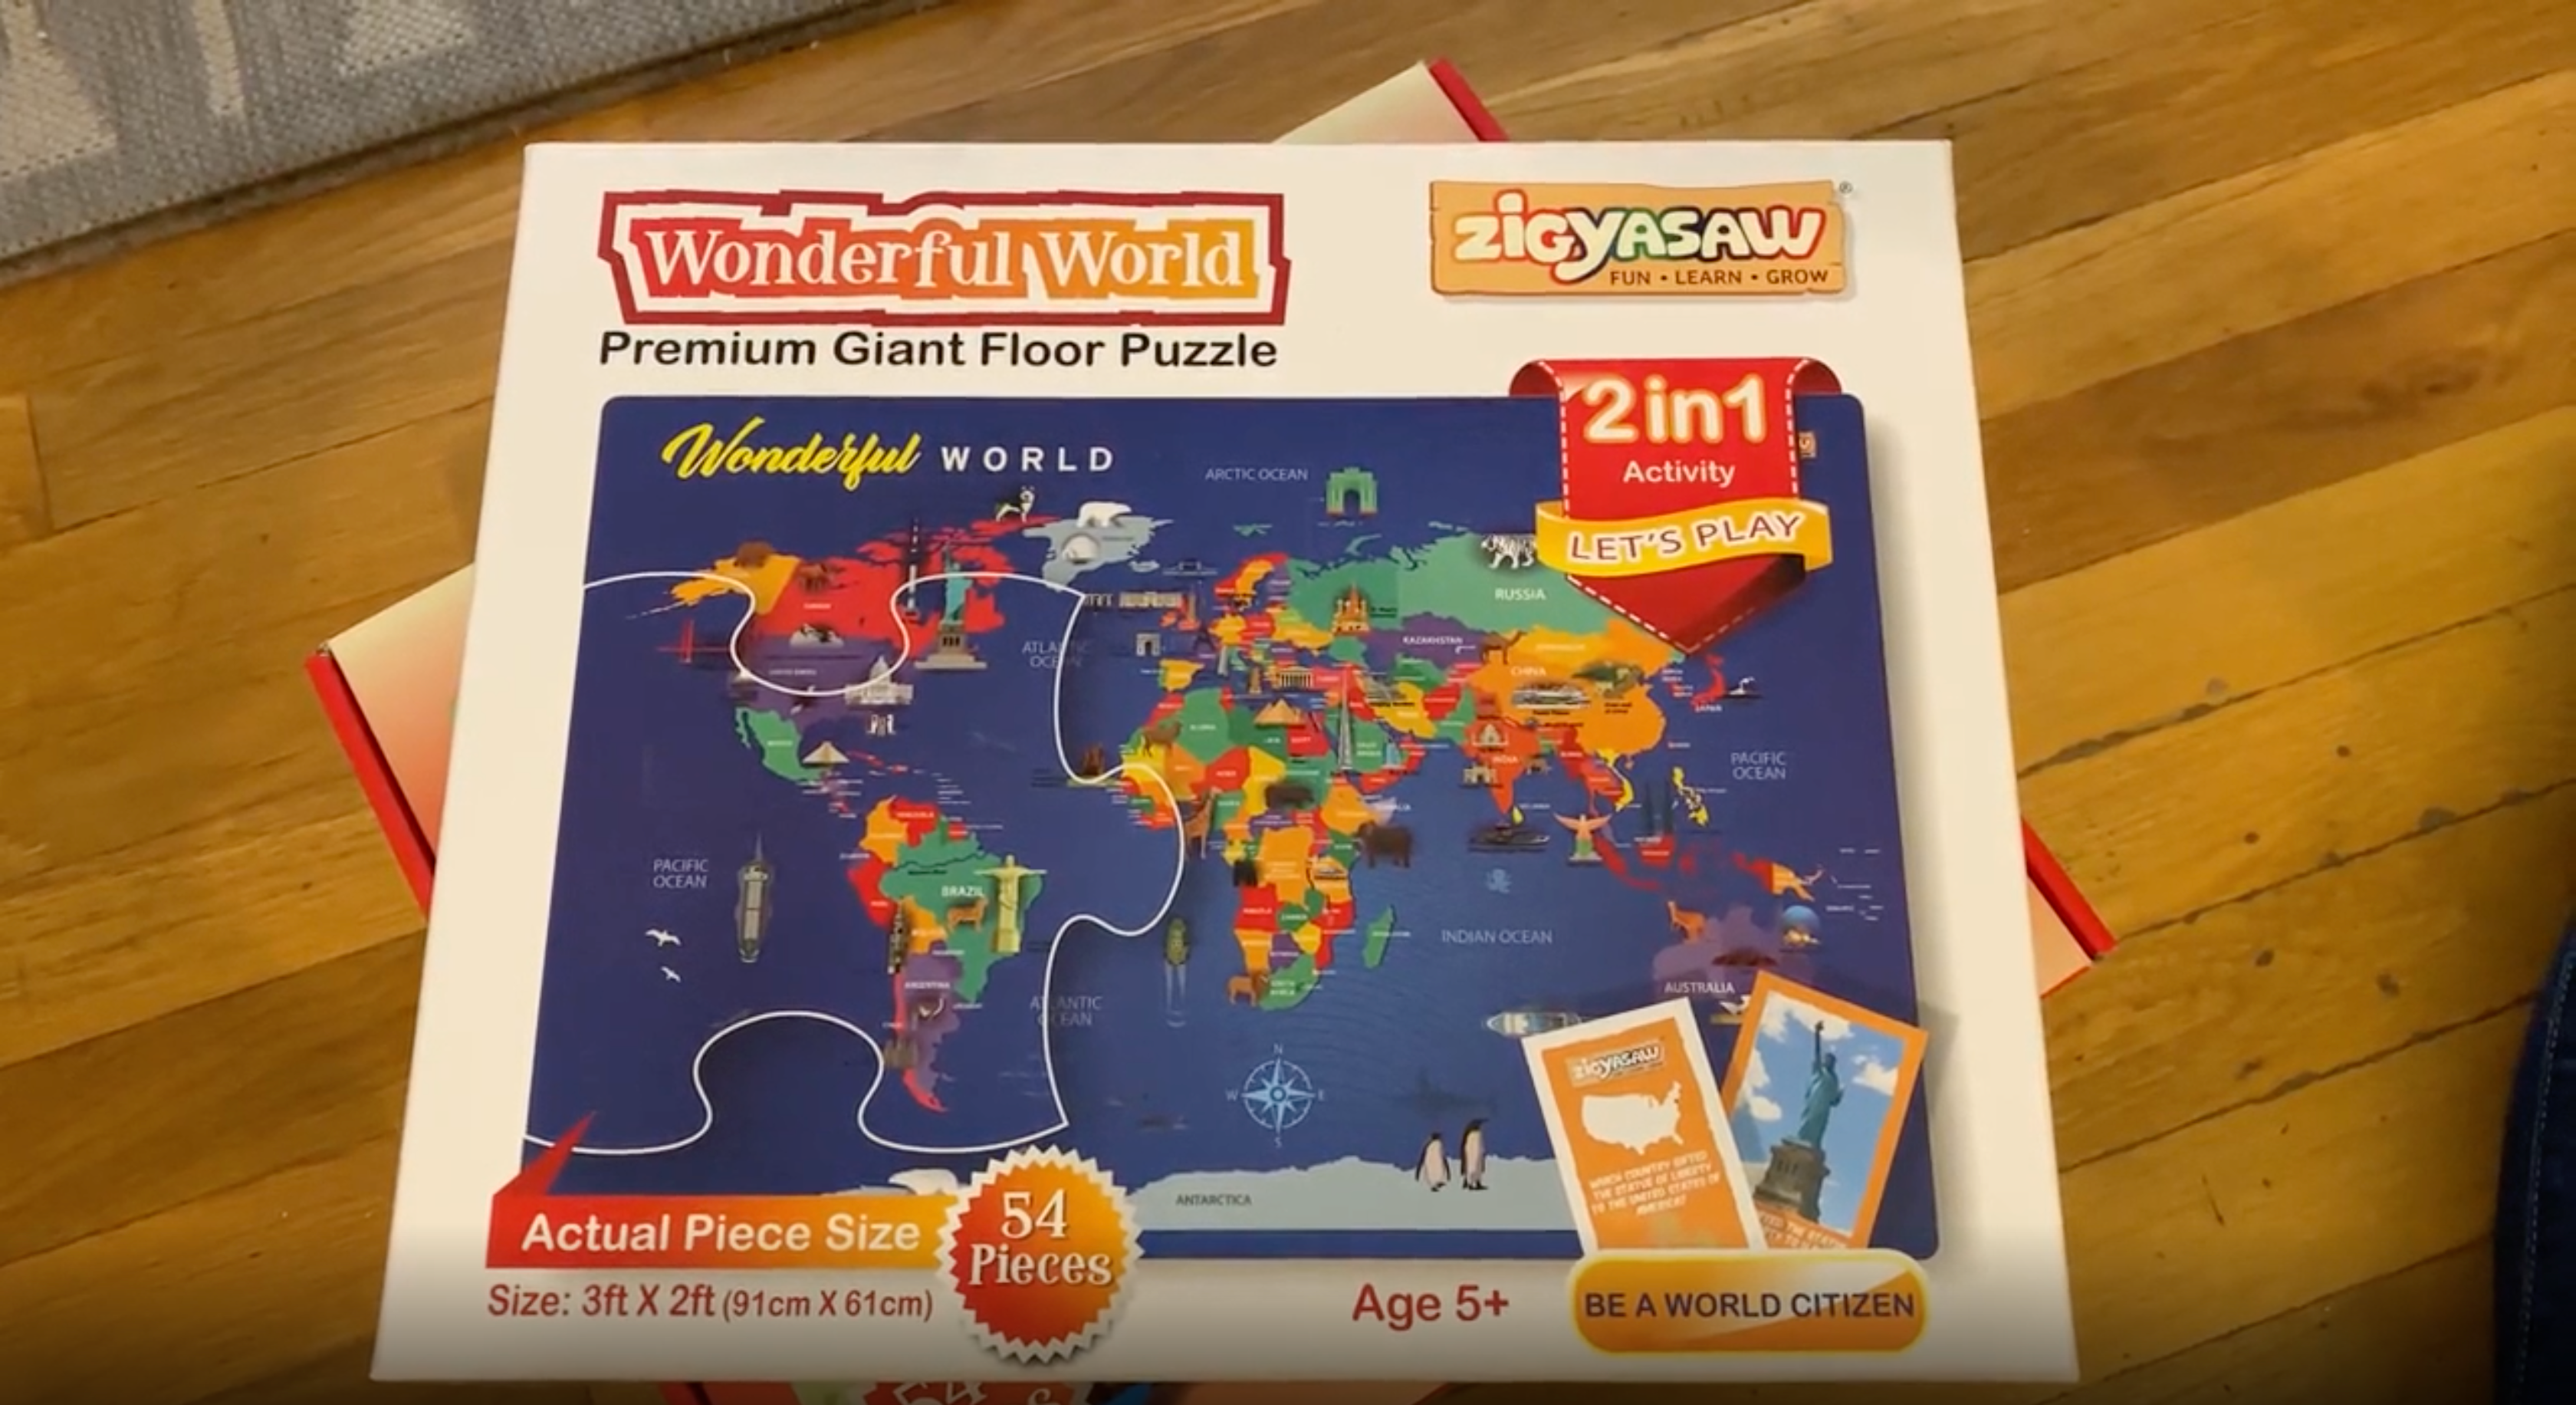 Zigyasaw Wonderful World premium giant floor puzzle game